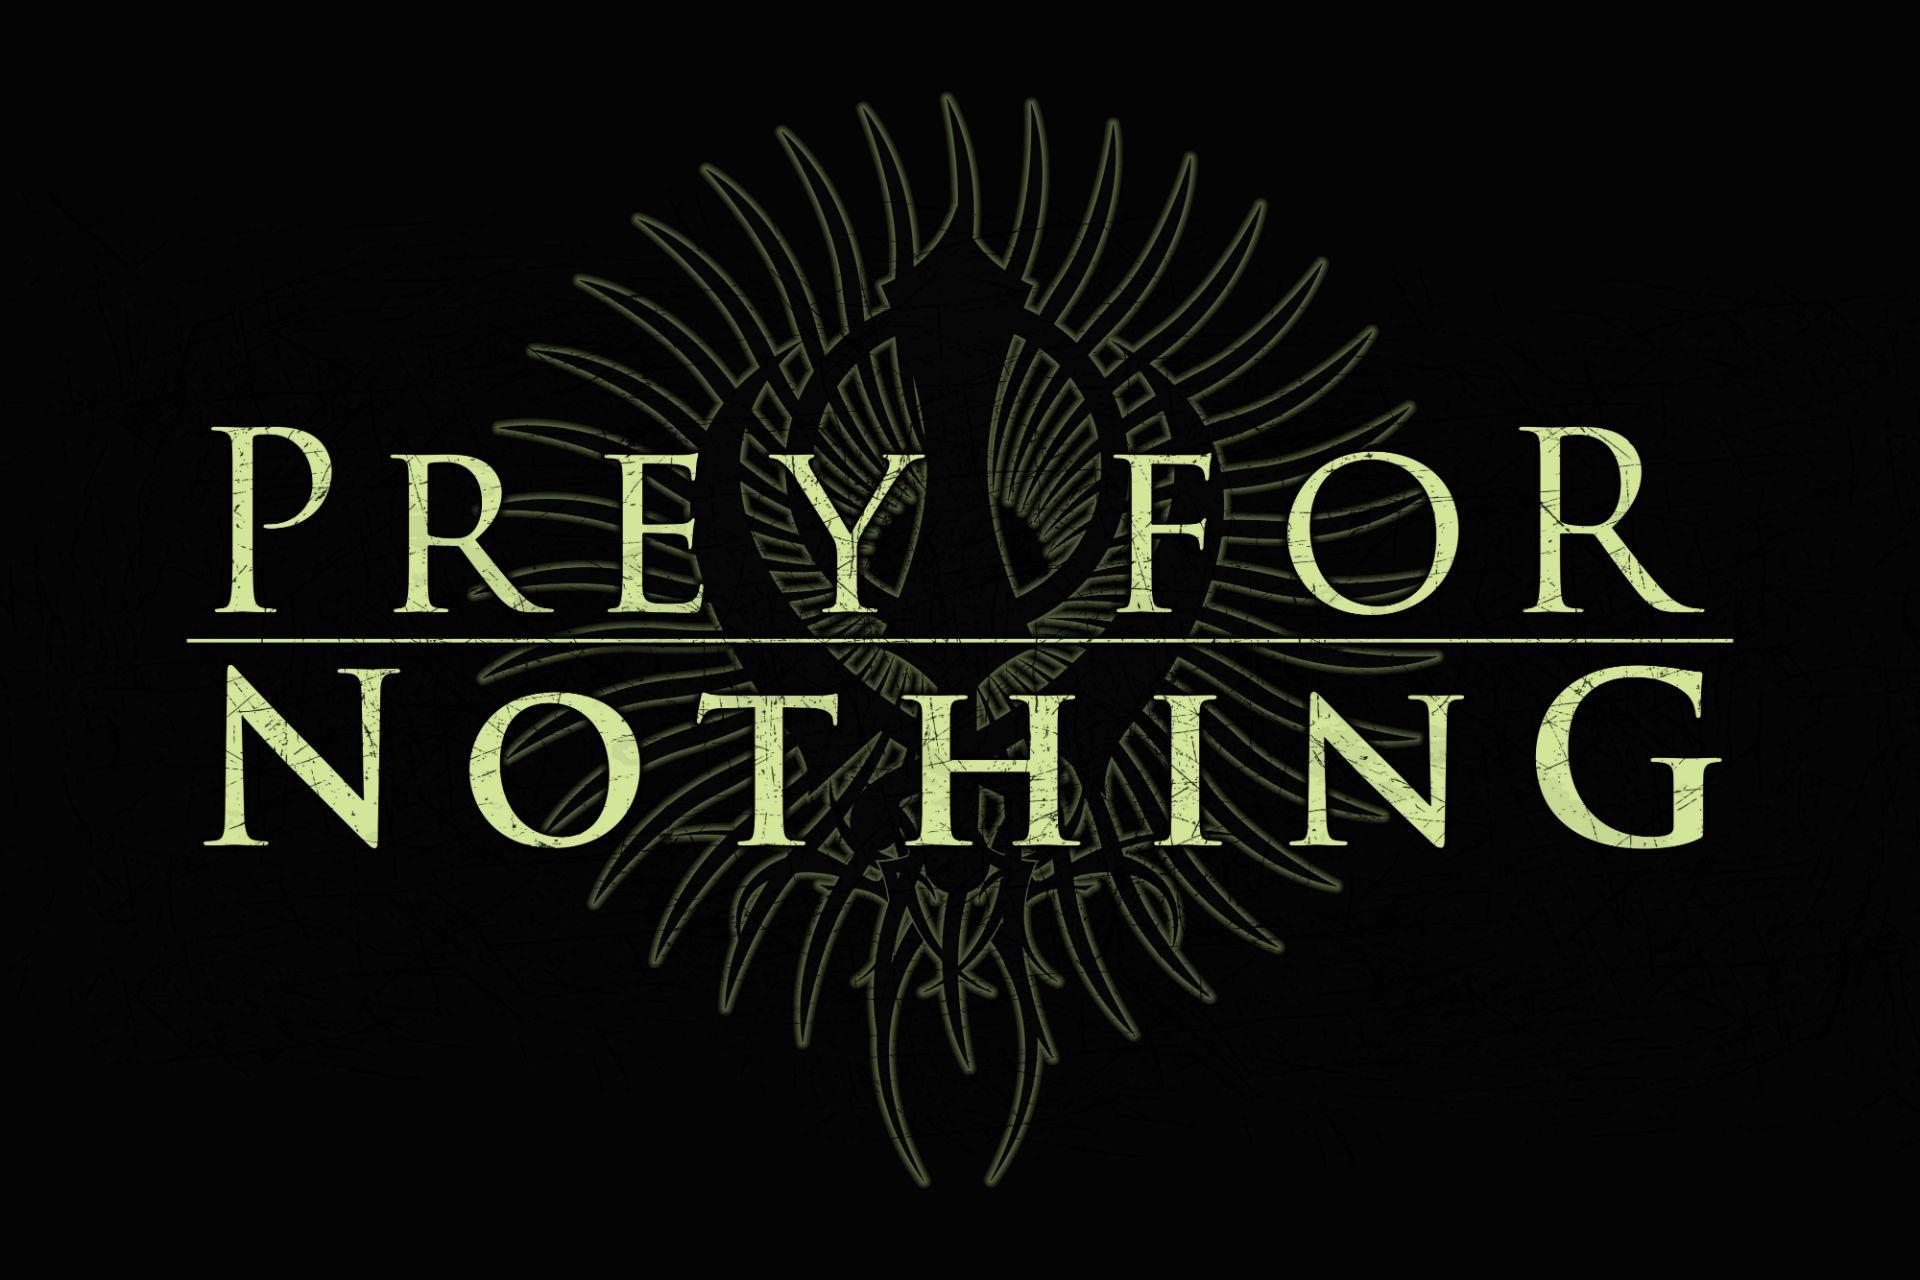 PRey FoR NoThINg Progressive Melodic Death Metal heavy logo